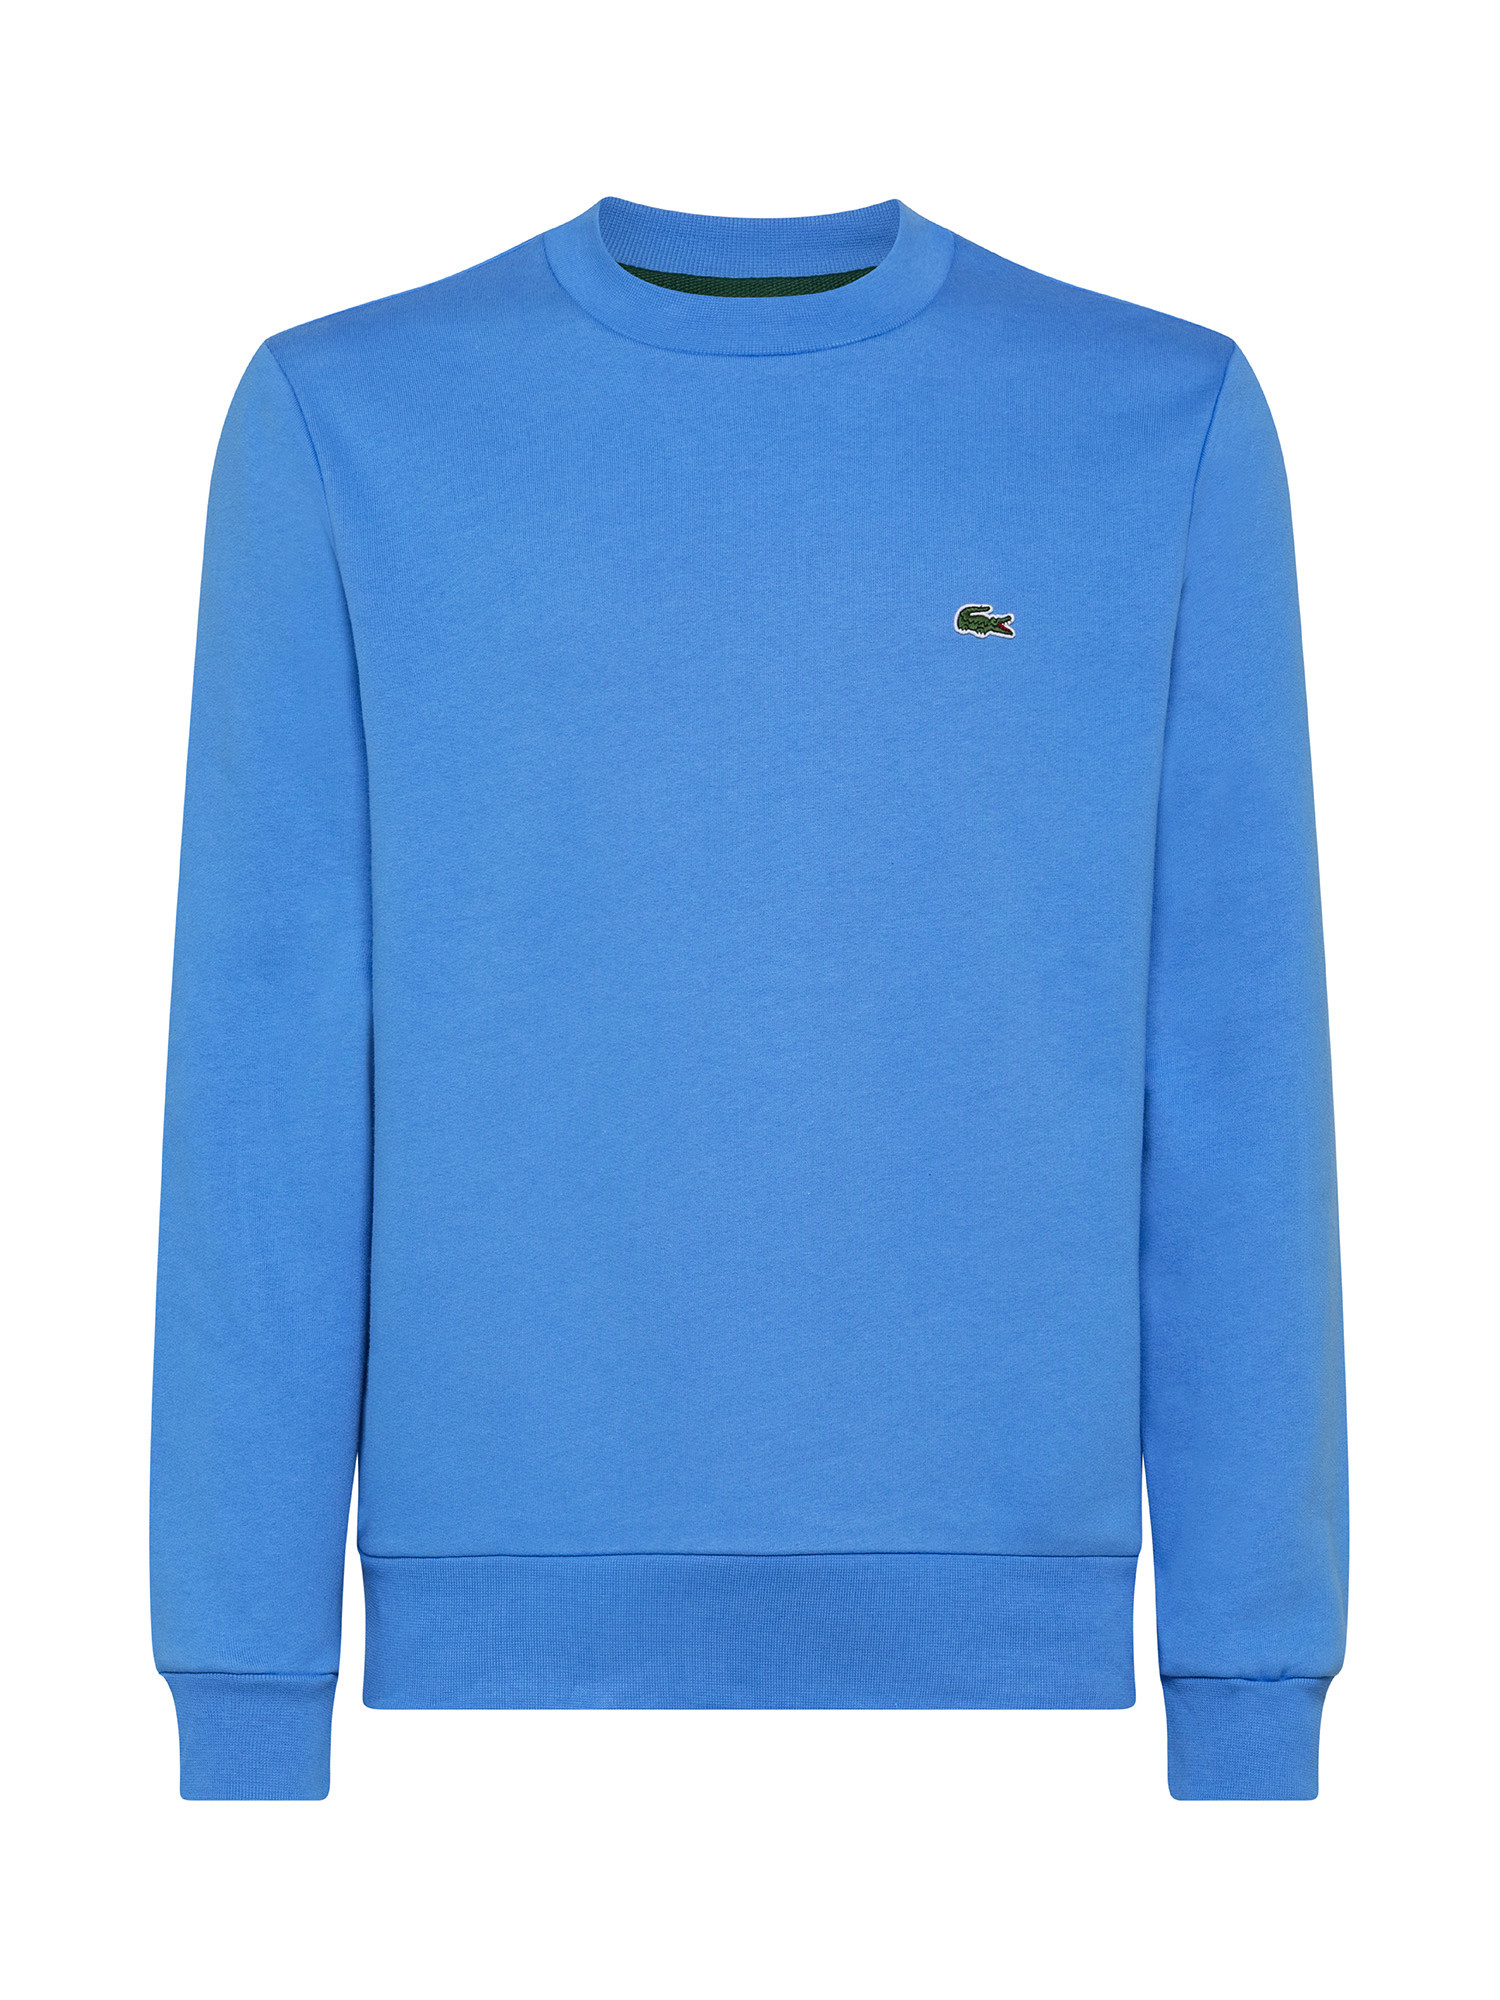 Lacoste - Sweatshirt in brushed organic cotton, Light Blue, large image number 0